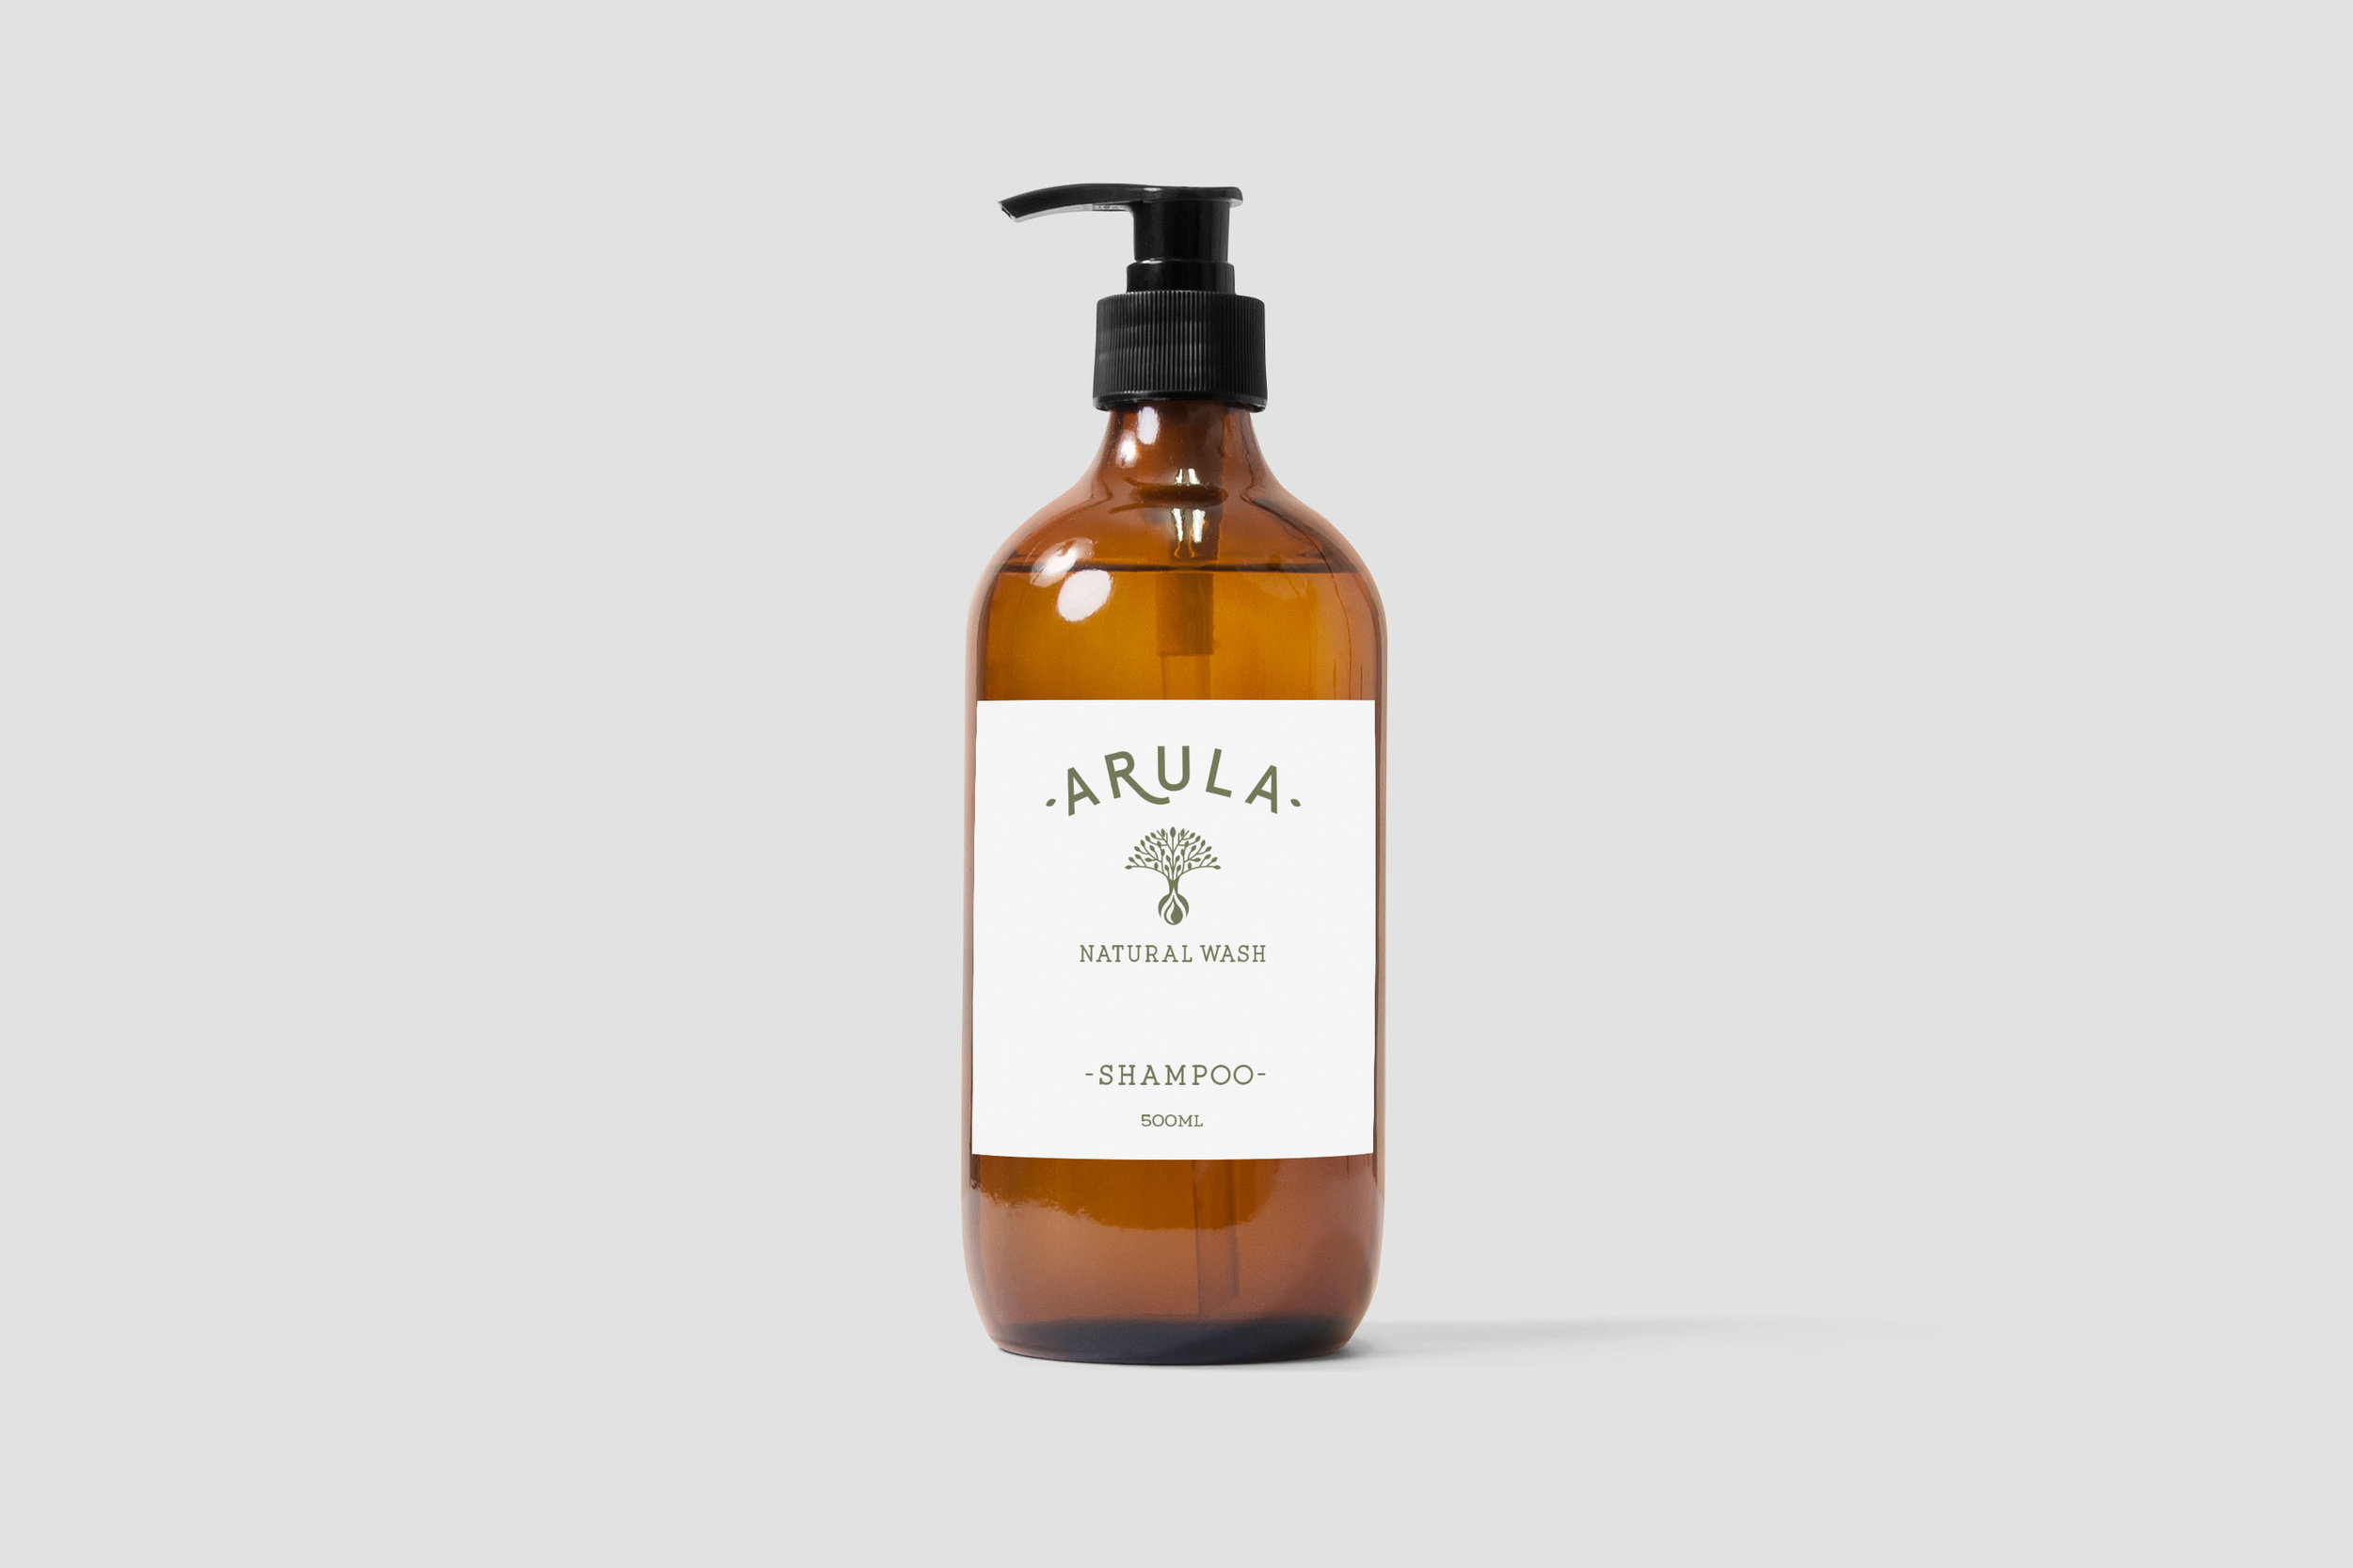 Freelance-graphic-designer-A Arula soap bottle in grey background